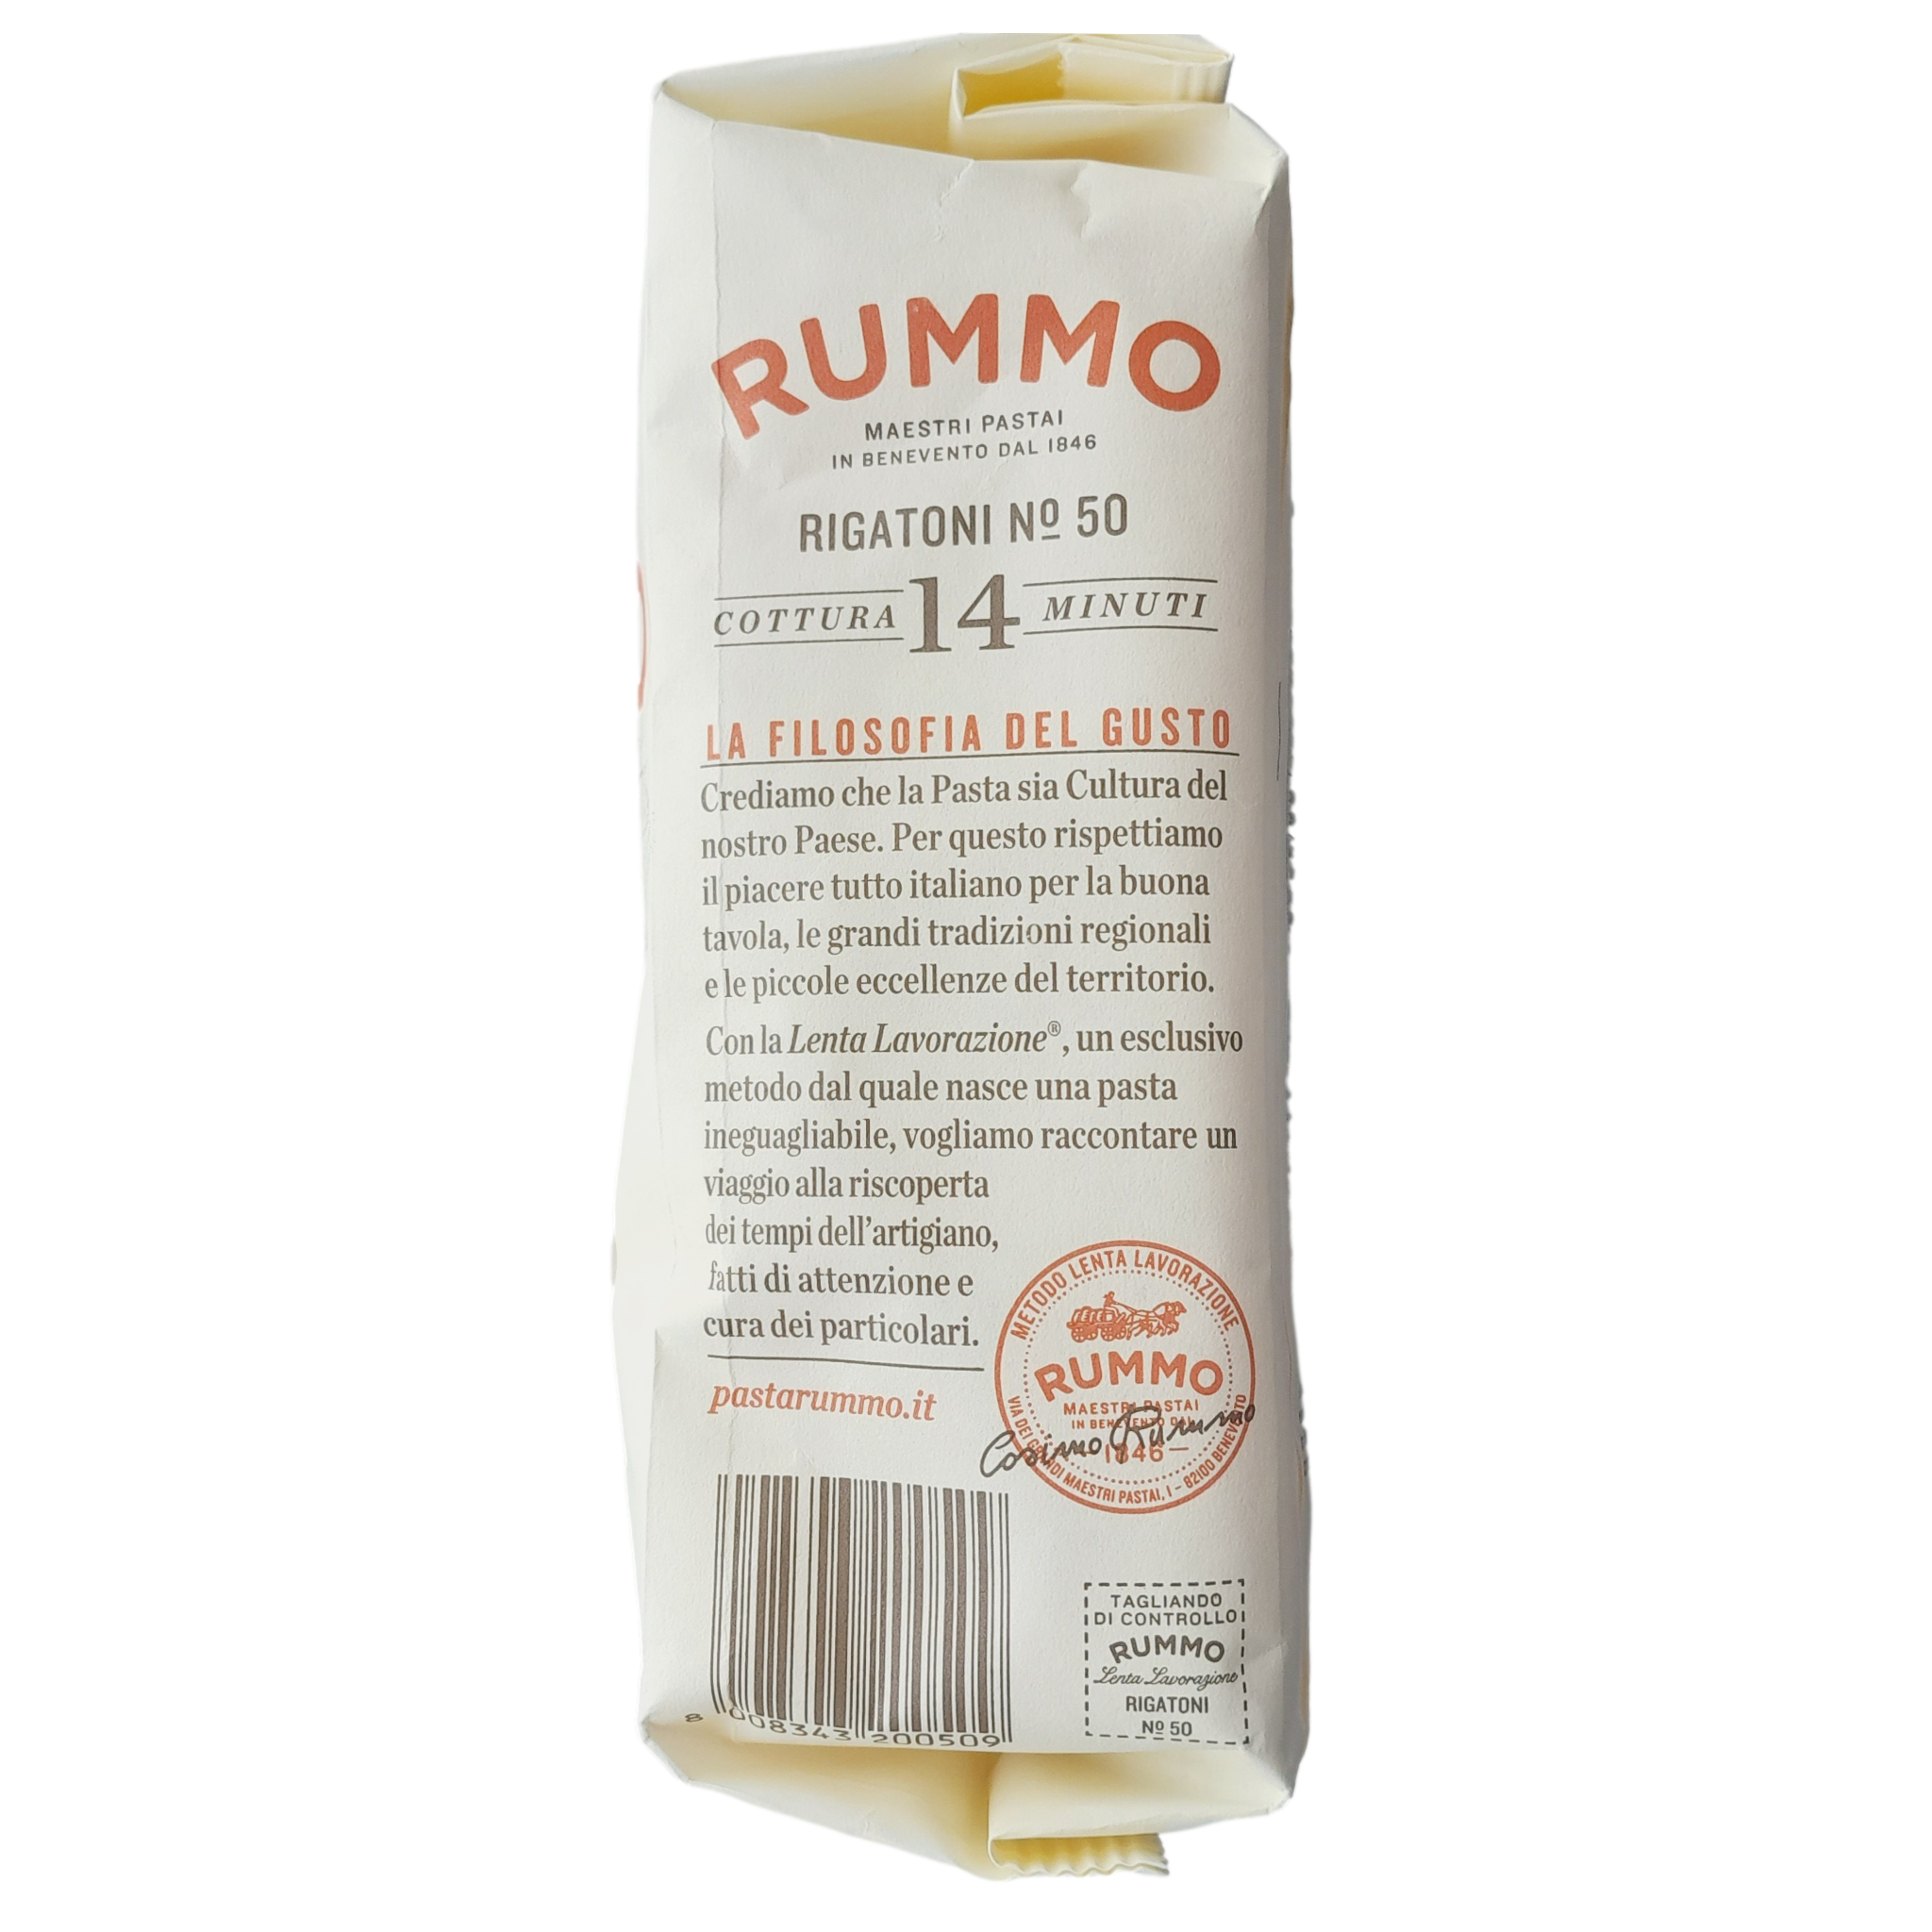 Rummo Rigatoni No.50